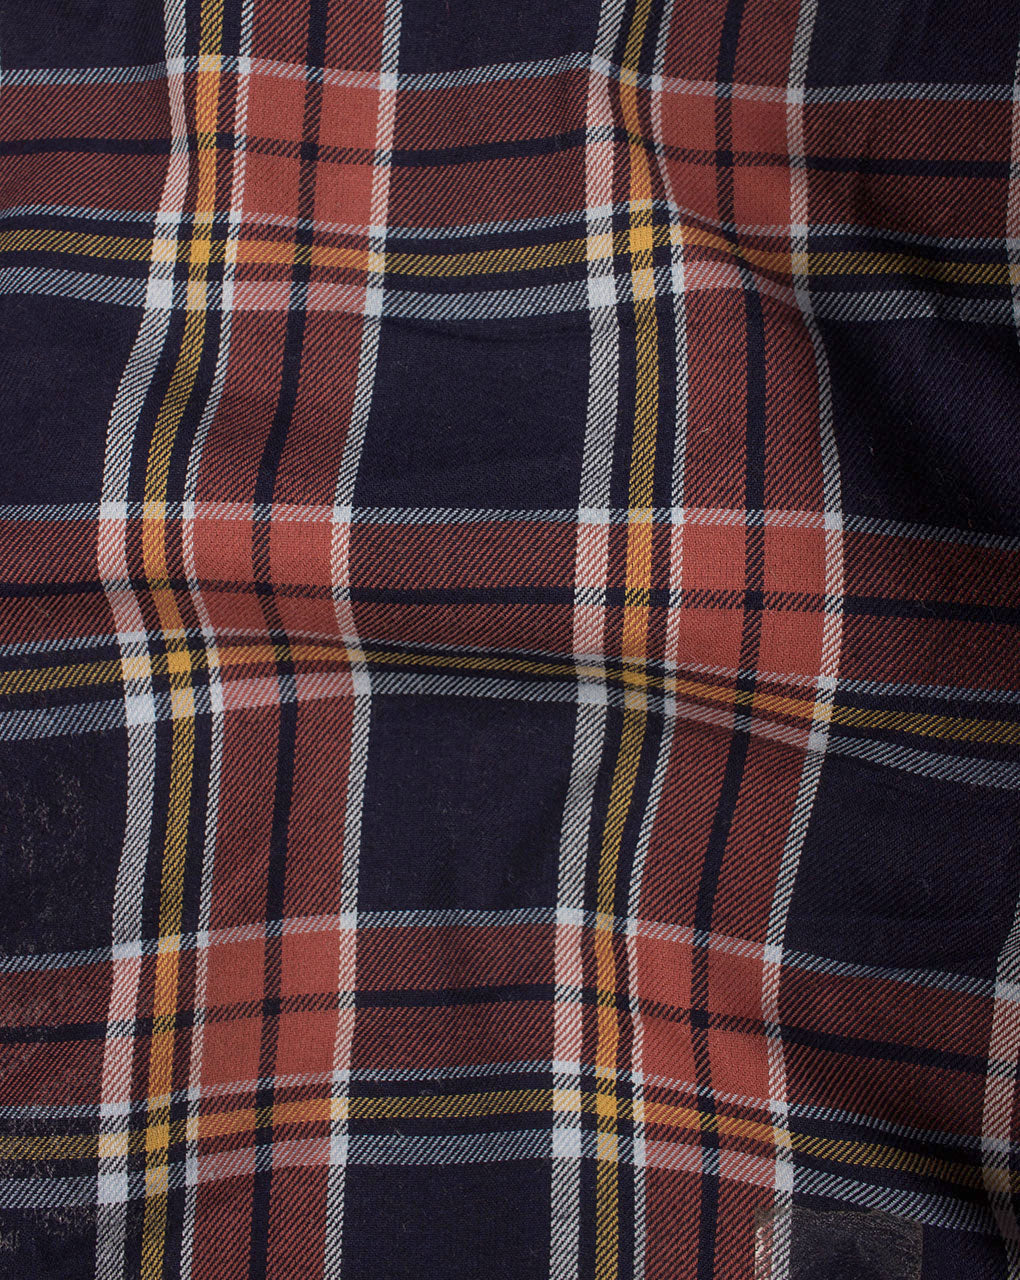 Woven Azo Free Dye indigo Tartan Checks Cotton Fabric ( Width 56 Inch ) - Fabriclore.com